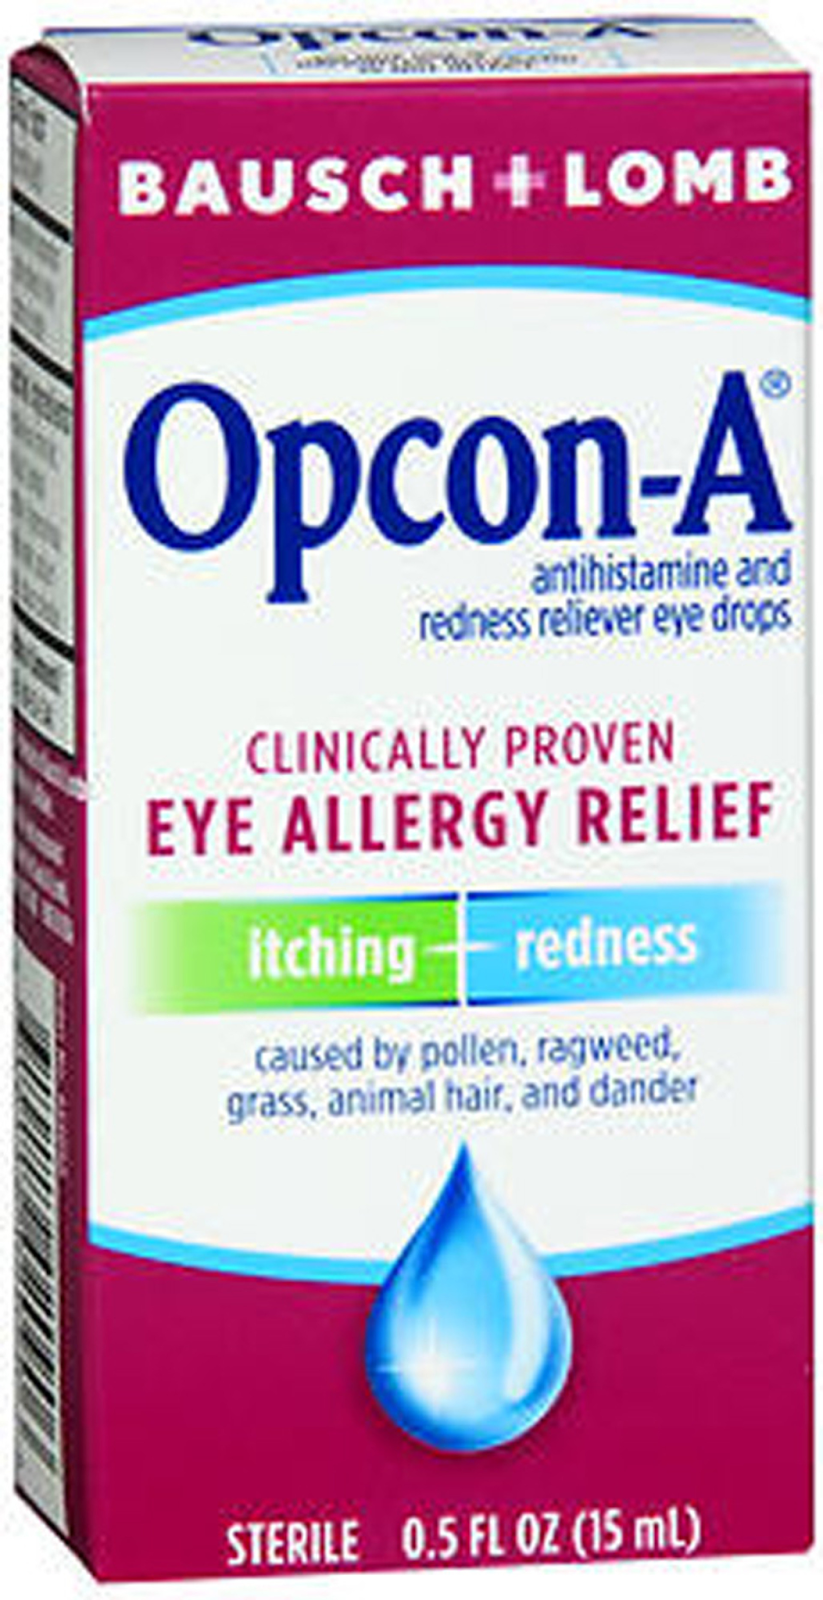 Bausch + Lomb Opcon-A Eye Drops Allergy Relief - 0.5 oz